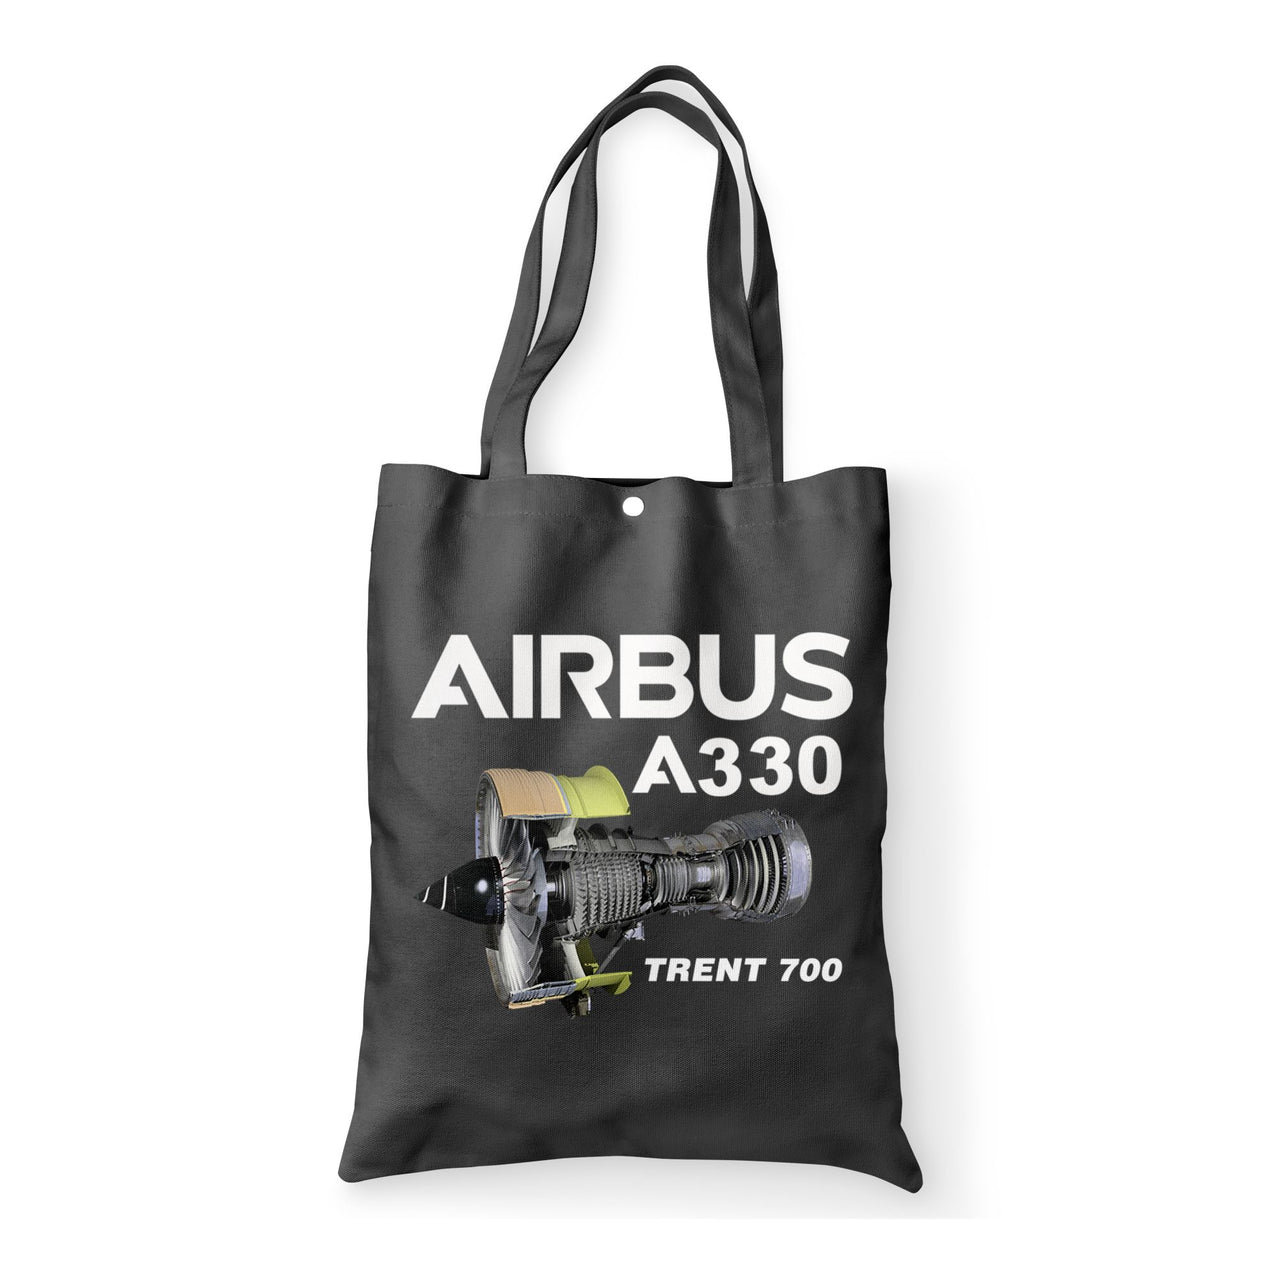 Airbus A330 & Trent 700 Engine Designed Tote Bags